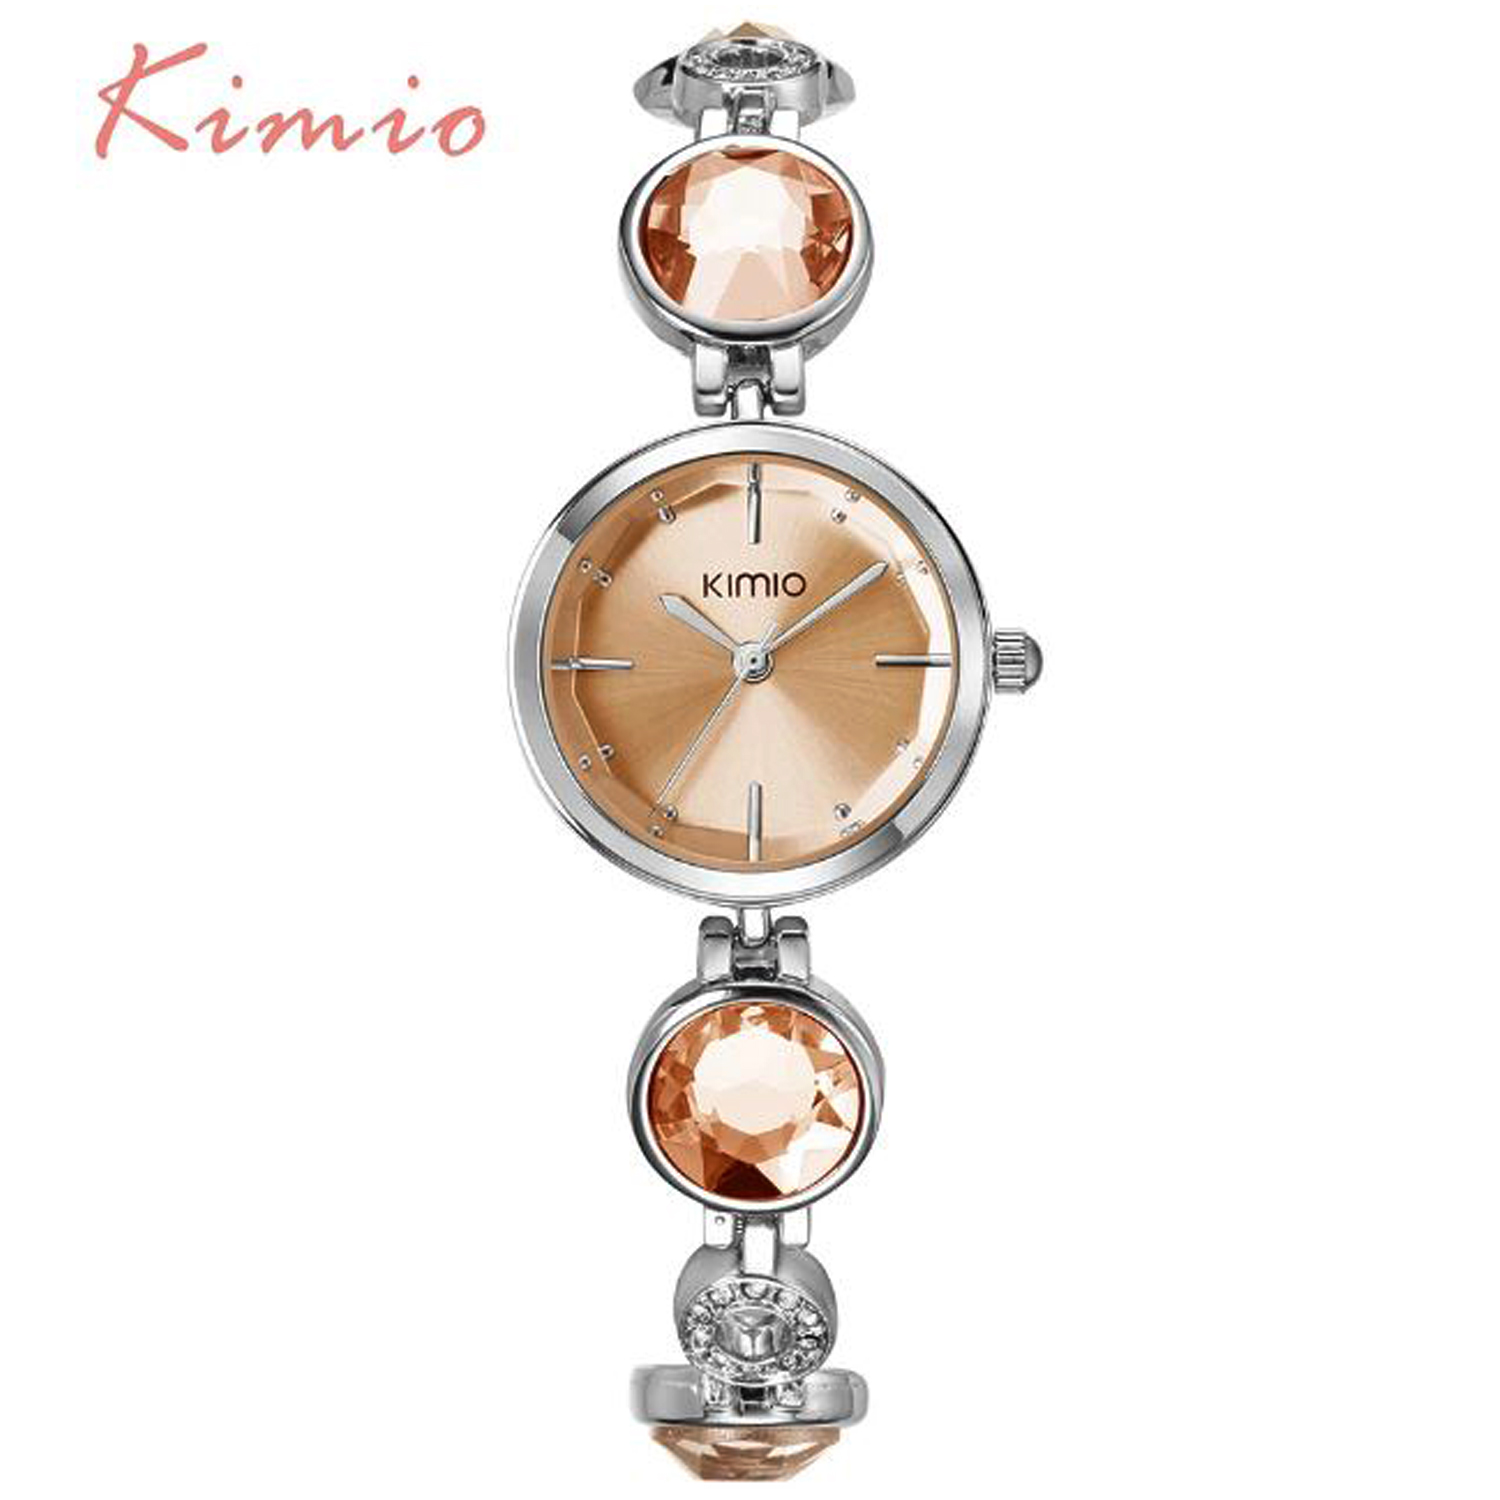 60.0% OFF on KIMIO Rose Gold Women Watch Fashion Elegant Quartz Bracelet  Wrist Watch K6211